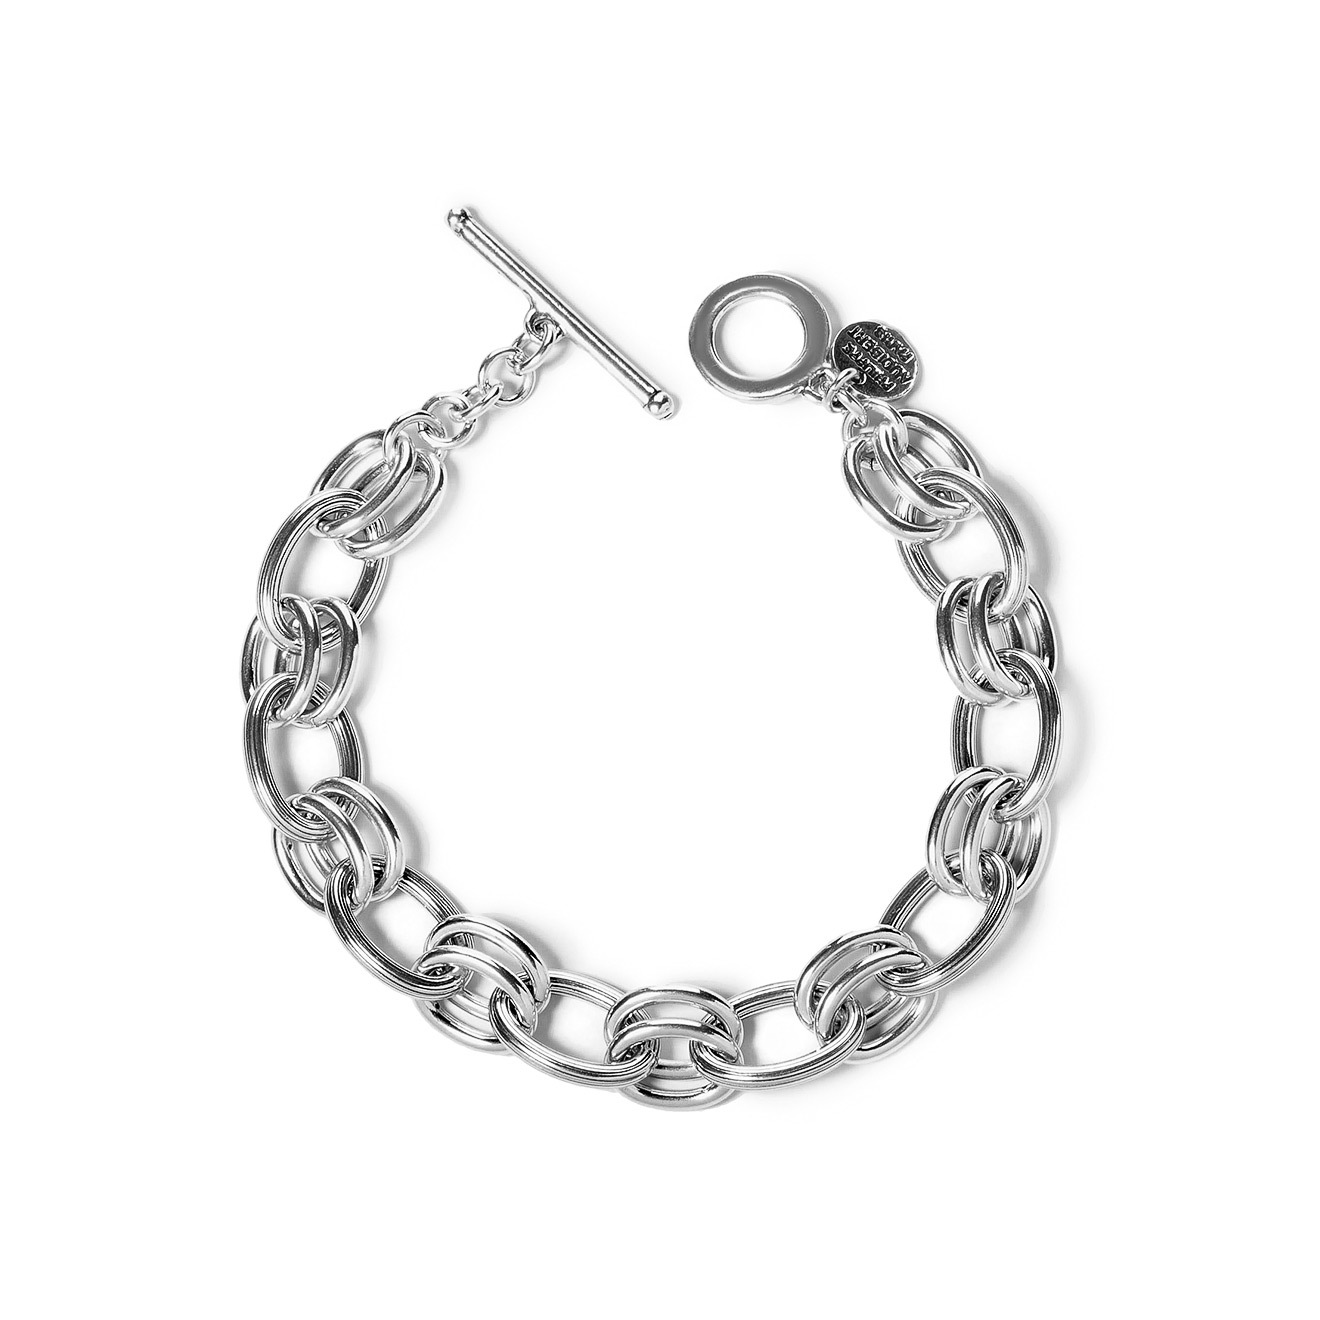 Philippe Audibert Серебристый браслет-цепь Byron lisa smith серебристый браслет цепь из круглых звеньев